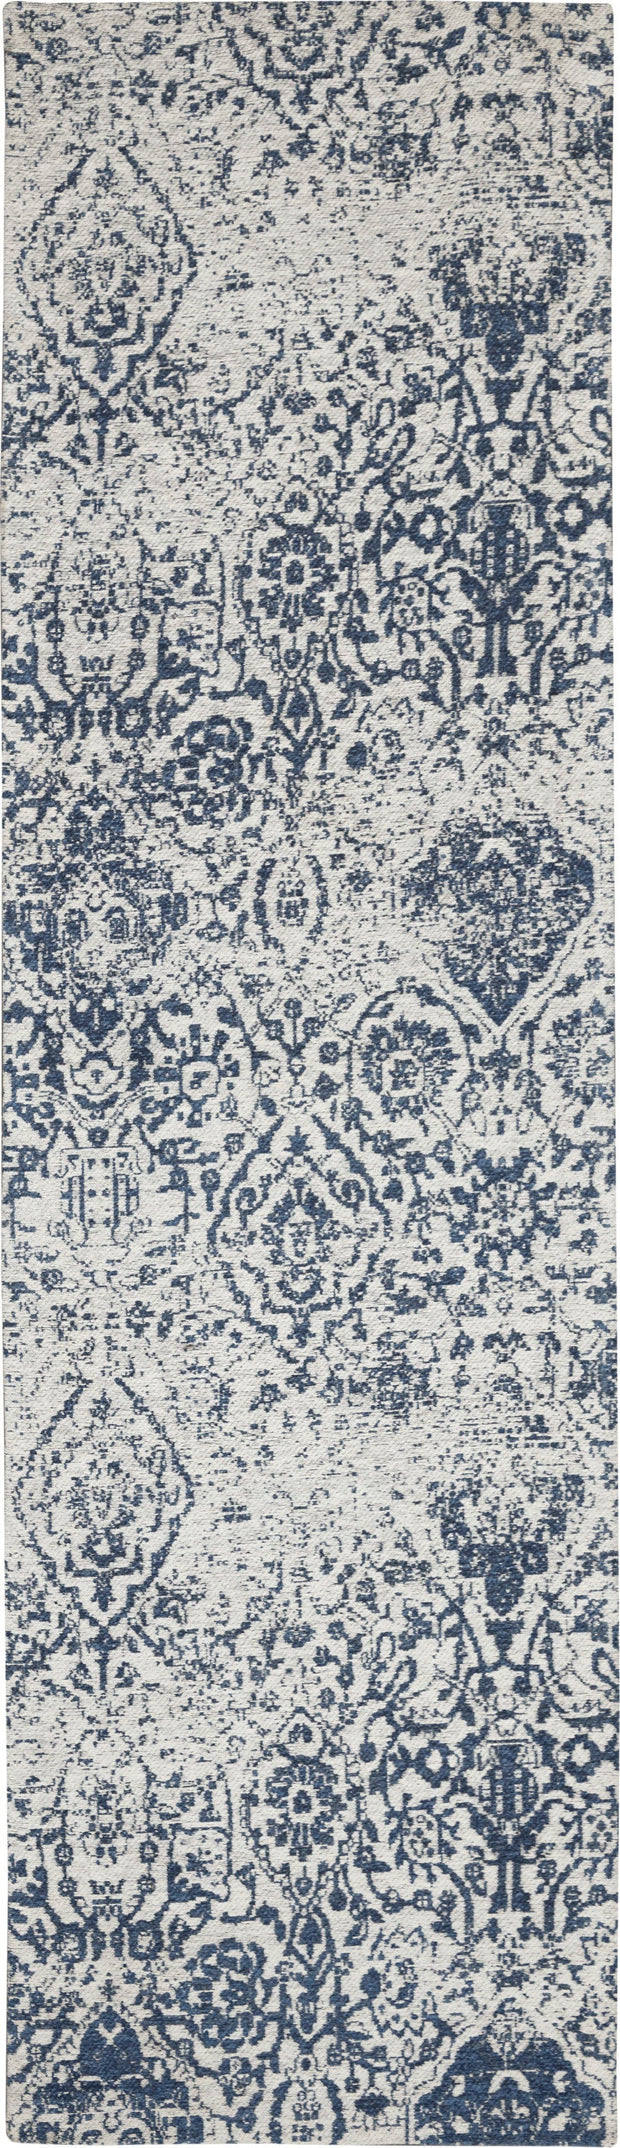 damask blue rug by nourison 99446769411 redo 2